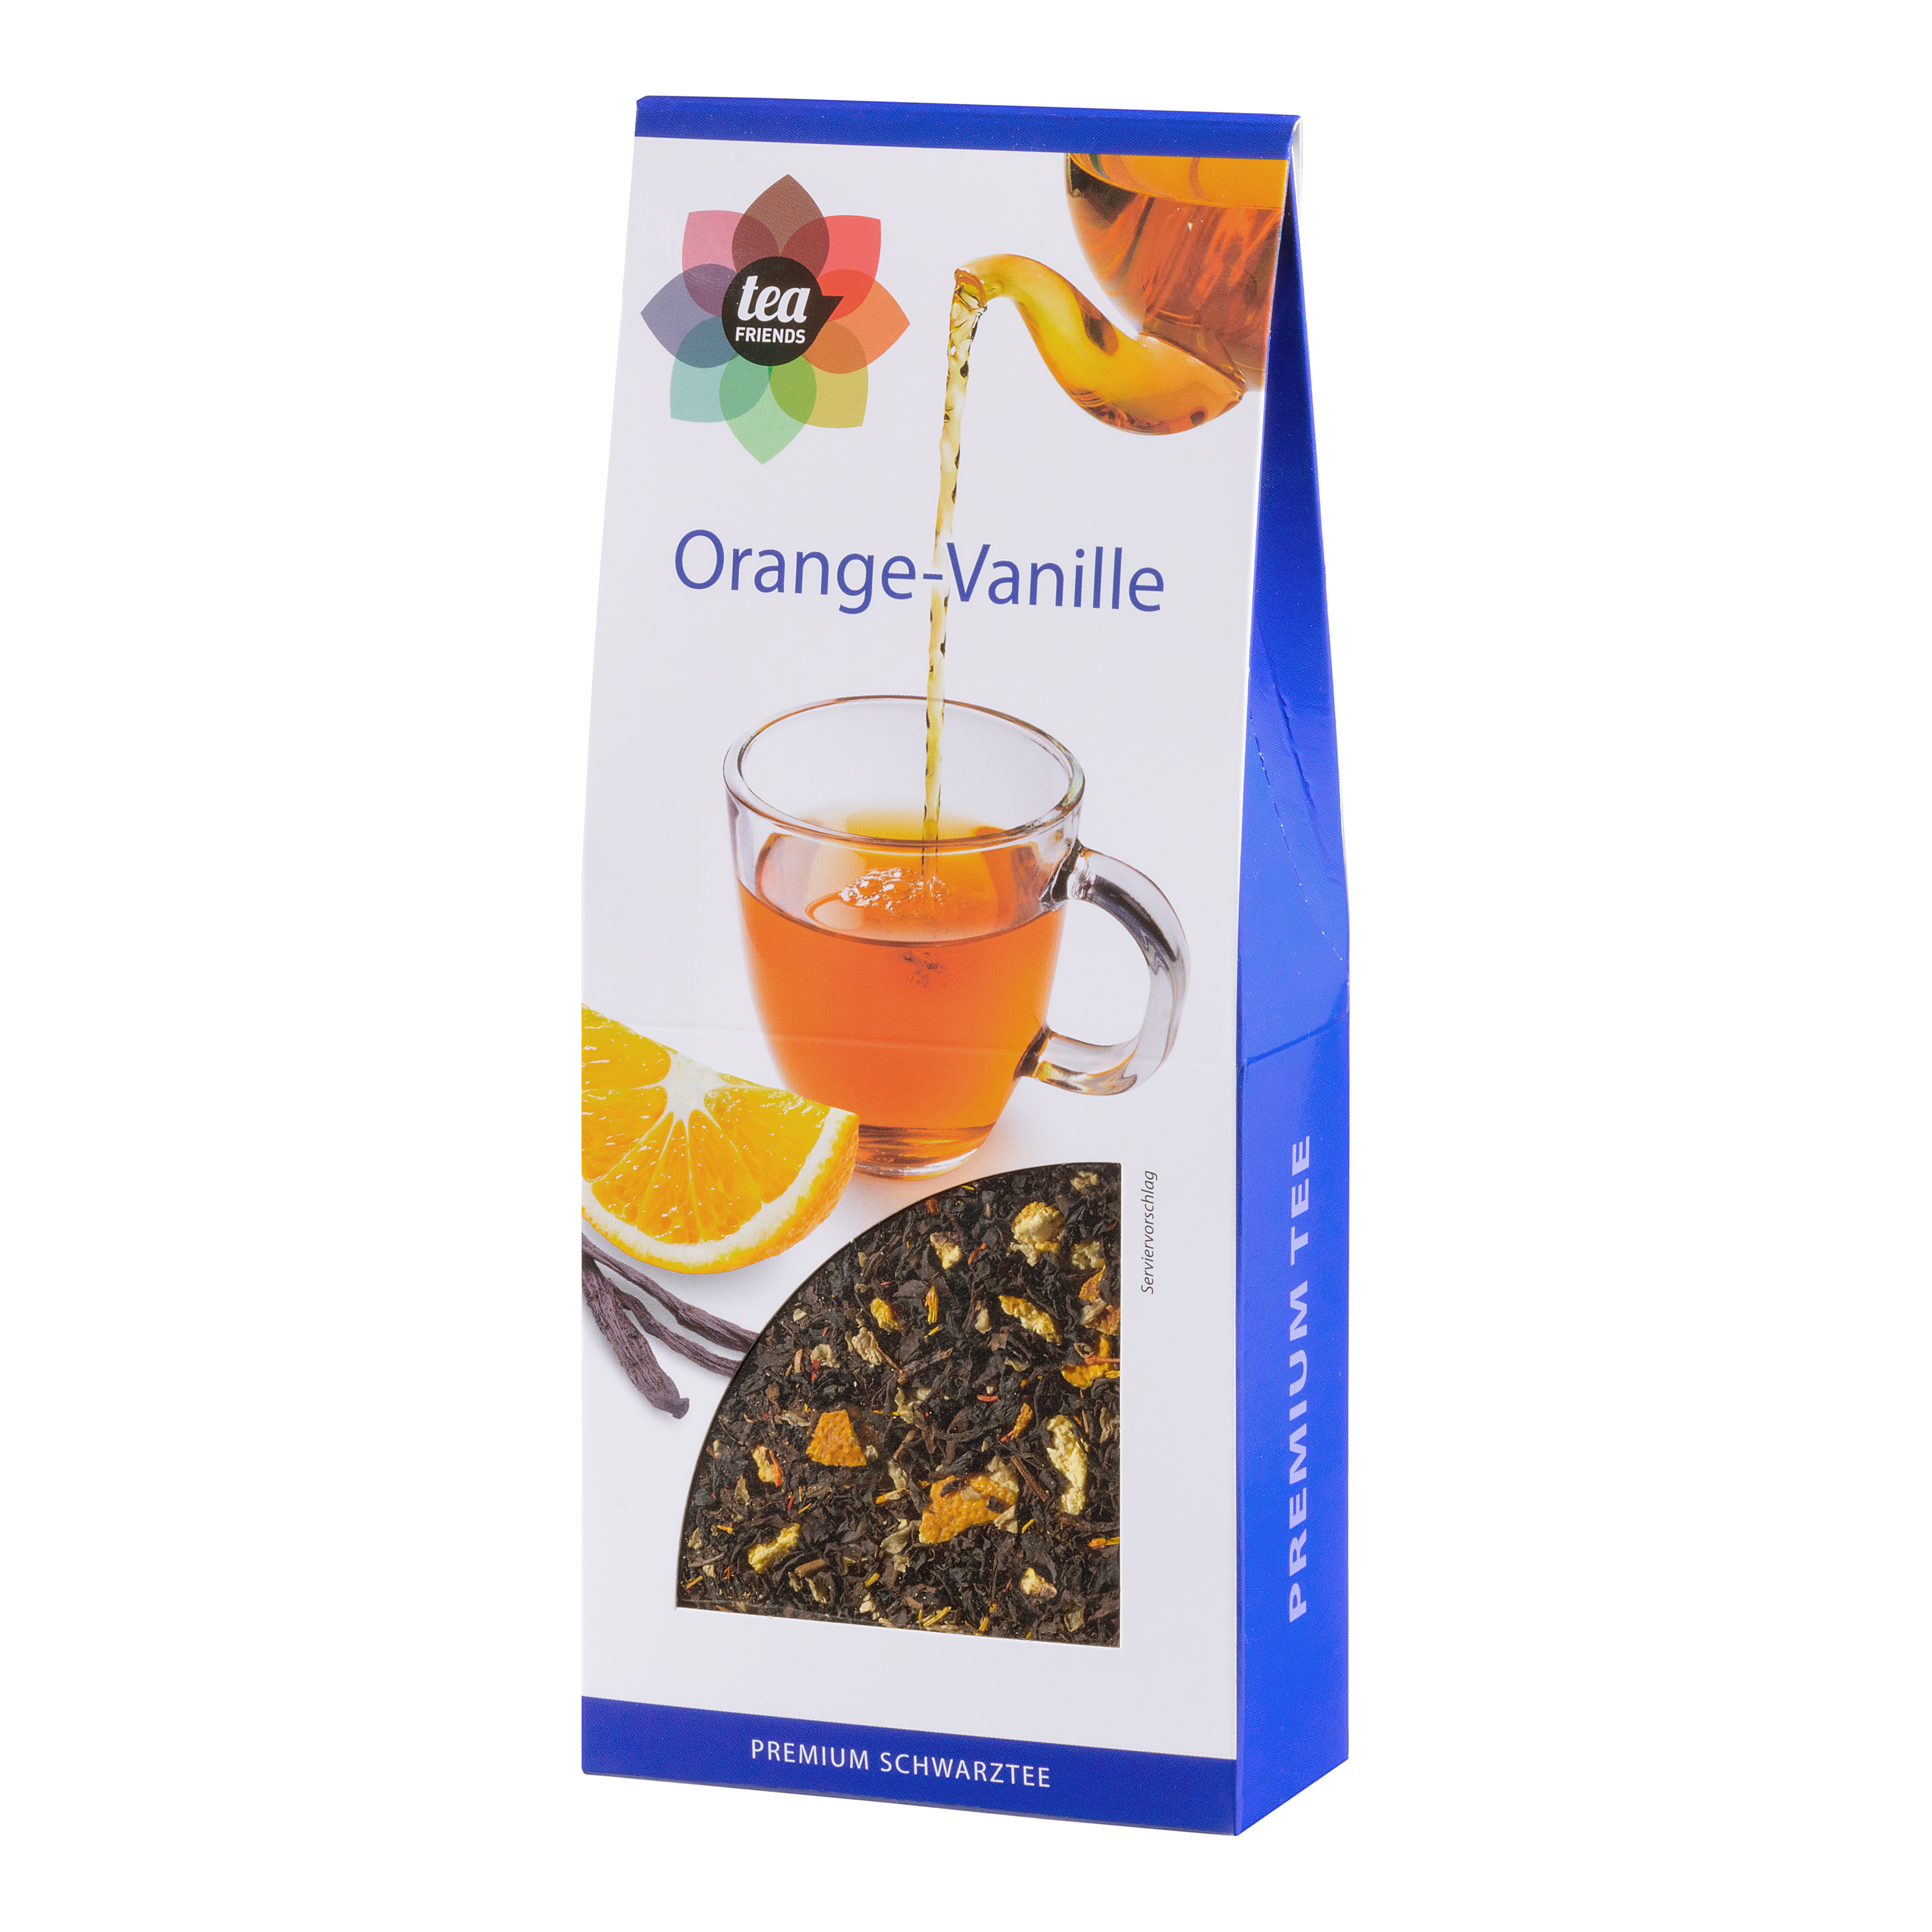 Orange-Vanille